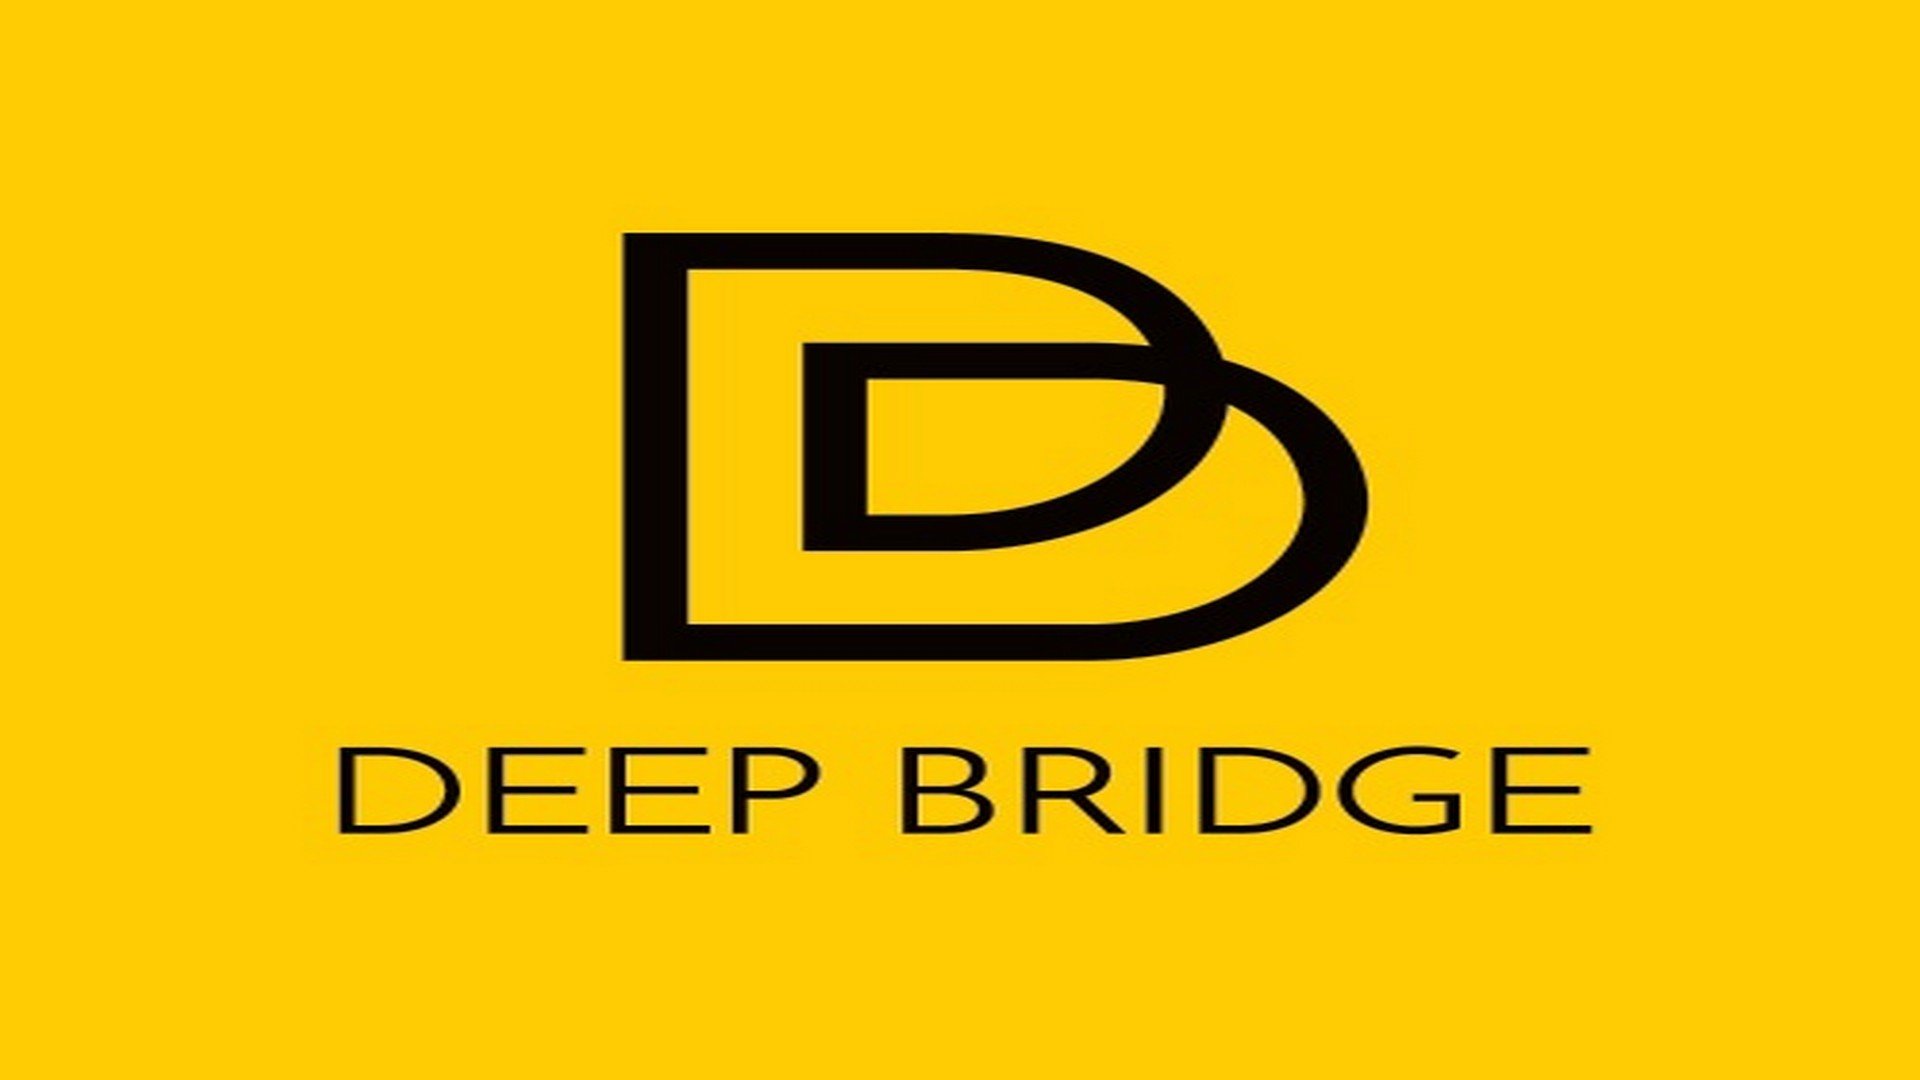 Extra speeldata én inleidend gesprek voor ‘La Cage Aux Folles’ - Logo deep bridge 1